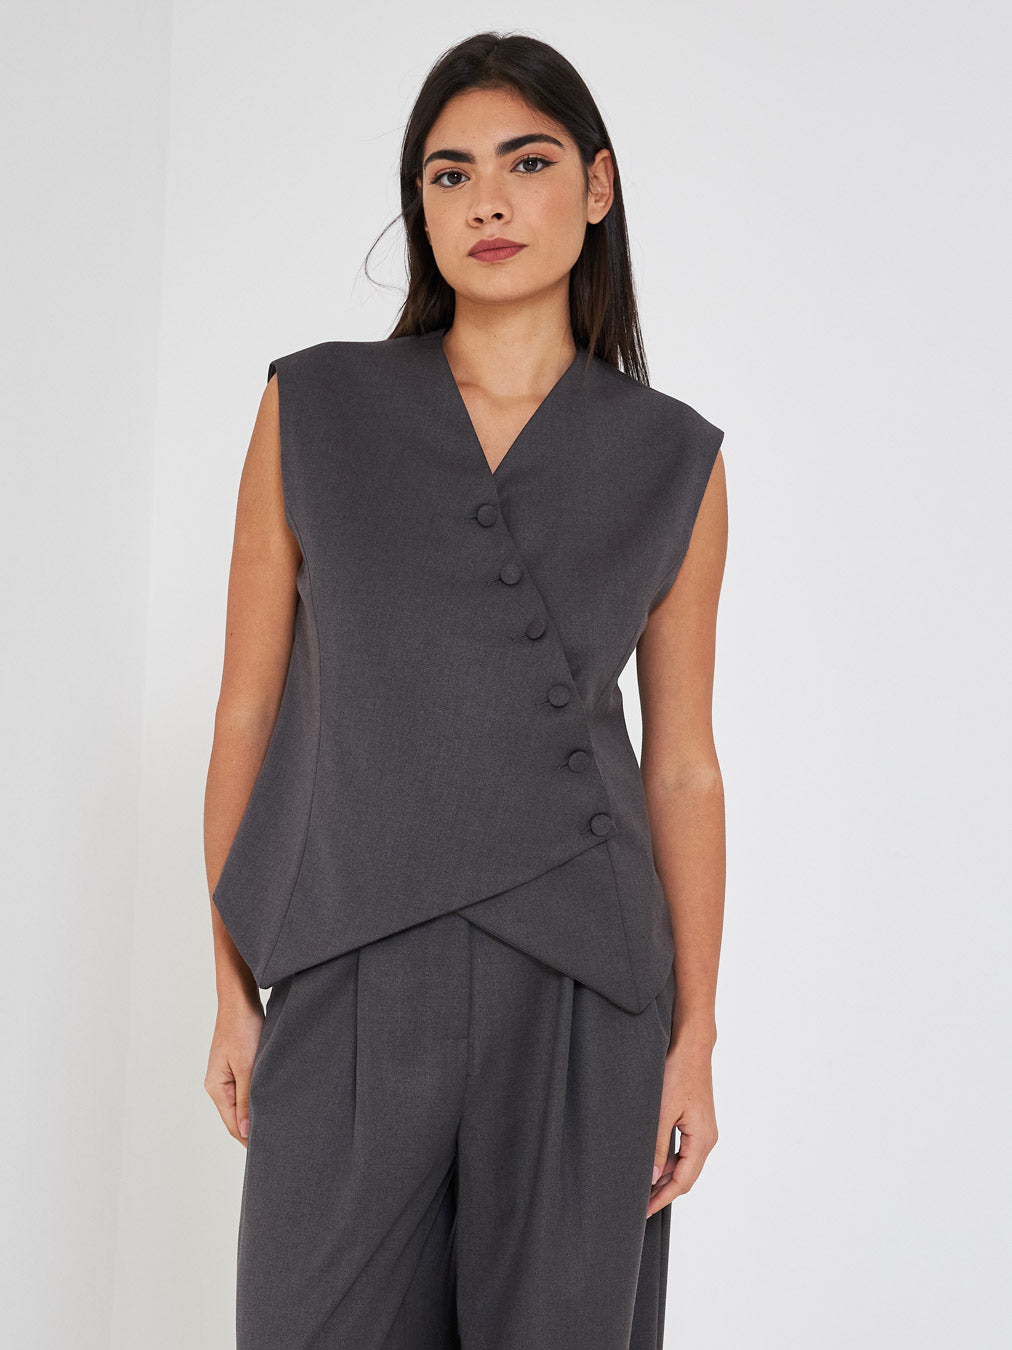 Kostumn gray waistcoat with asymmetric buttons